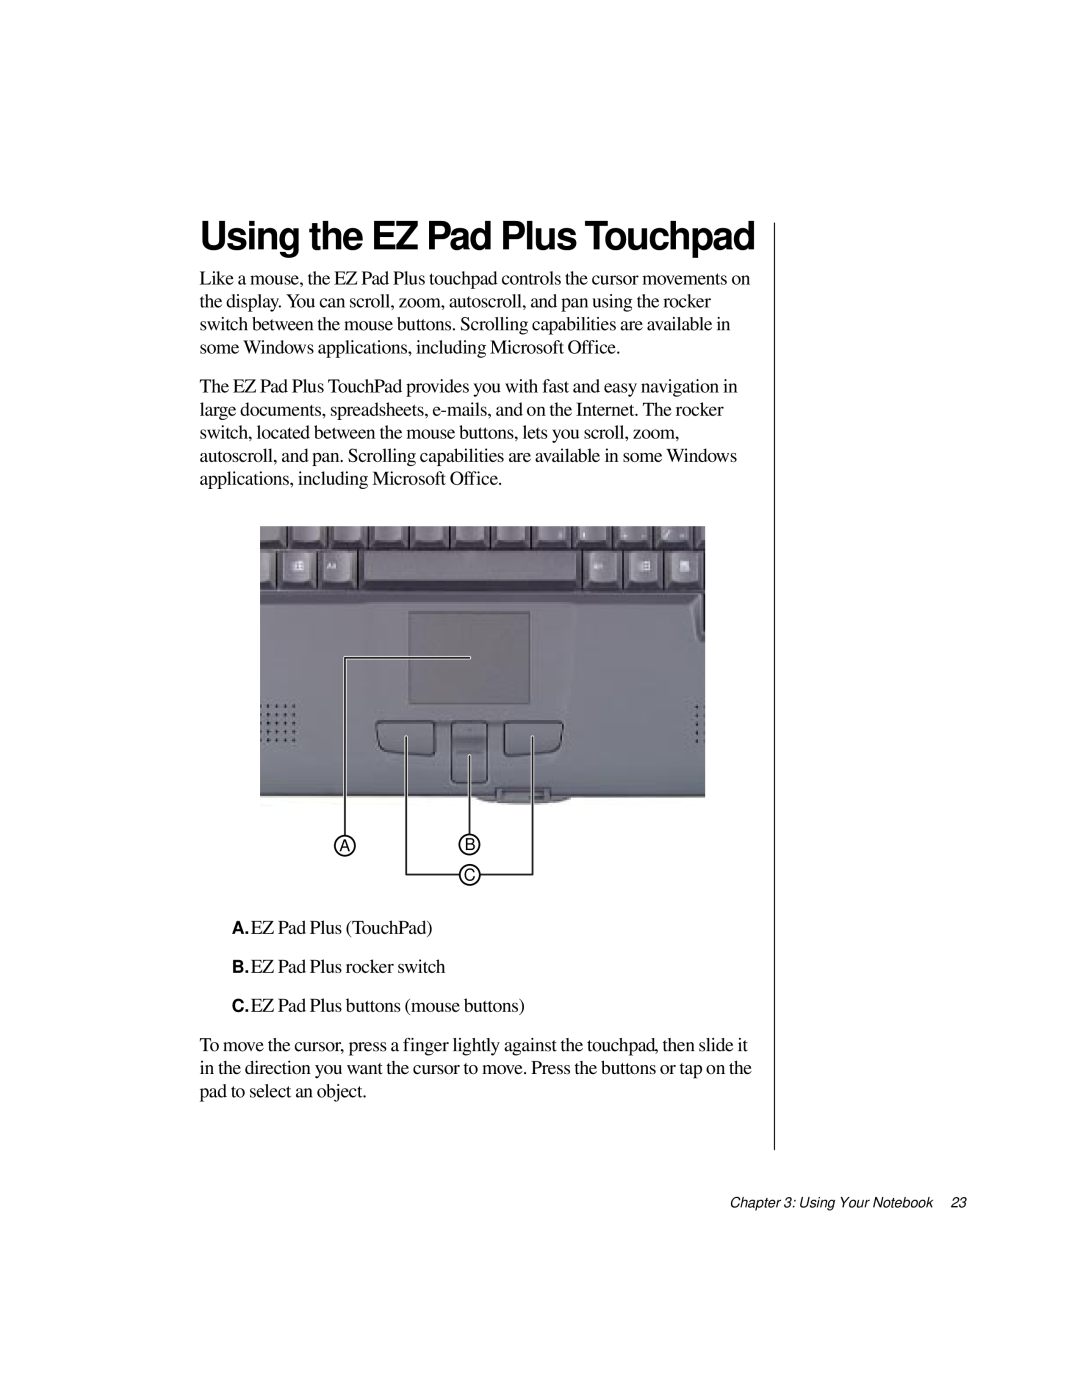 Gateway TM 5150 manual Using the EZ Pad Plus Touchpad 